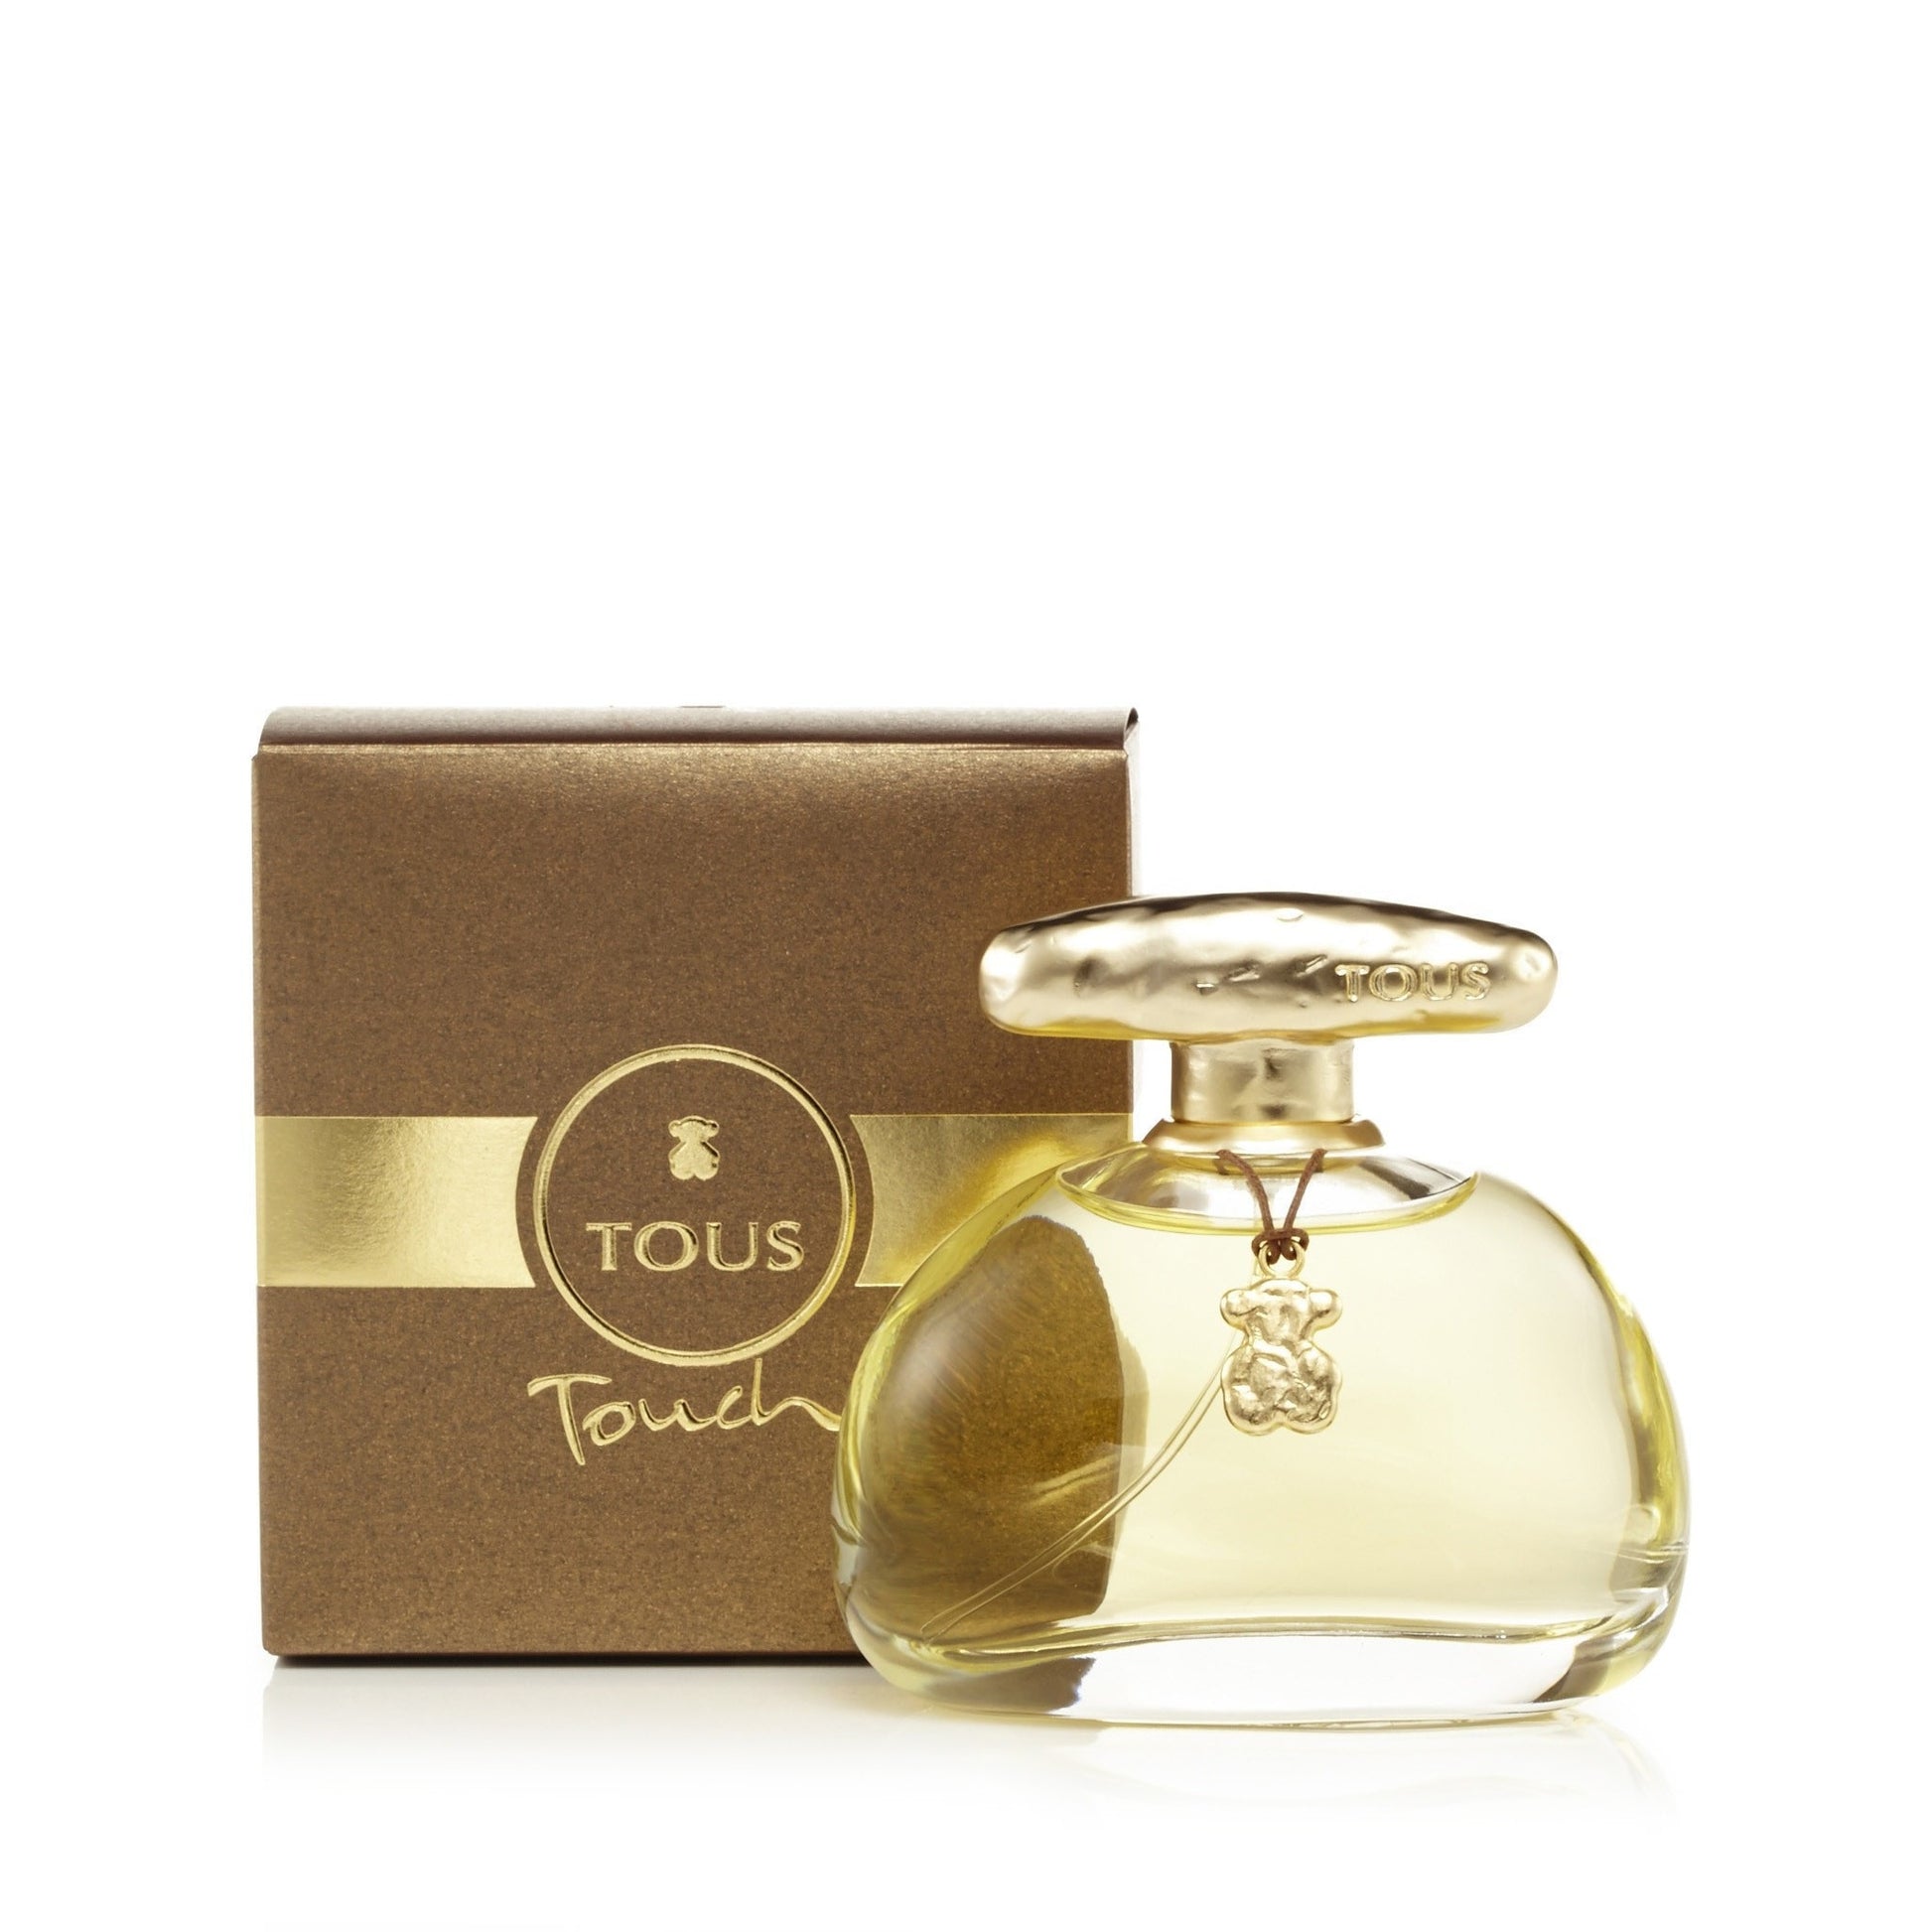 Tous Touch Eau de Toilette Womens Spray 3.4 oz.  Click to open in modal